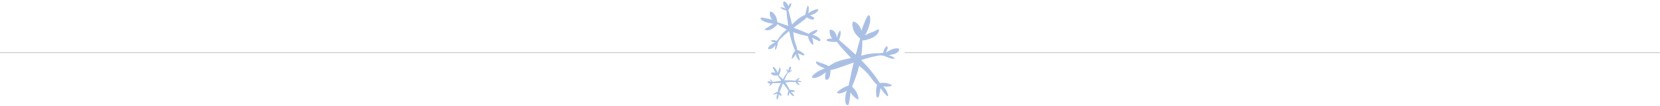 Illustration of snowflakes.